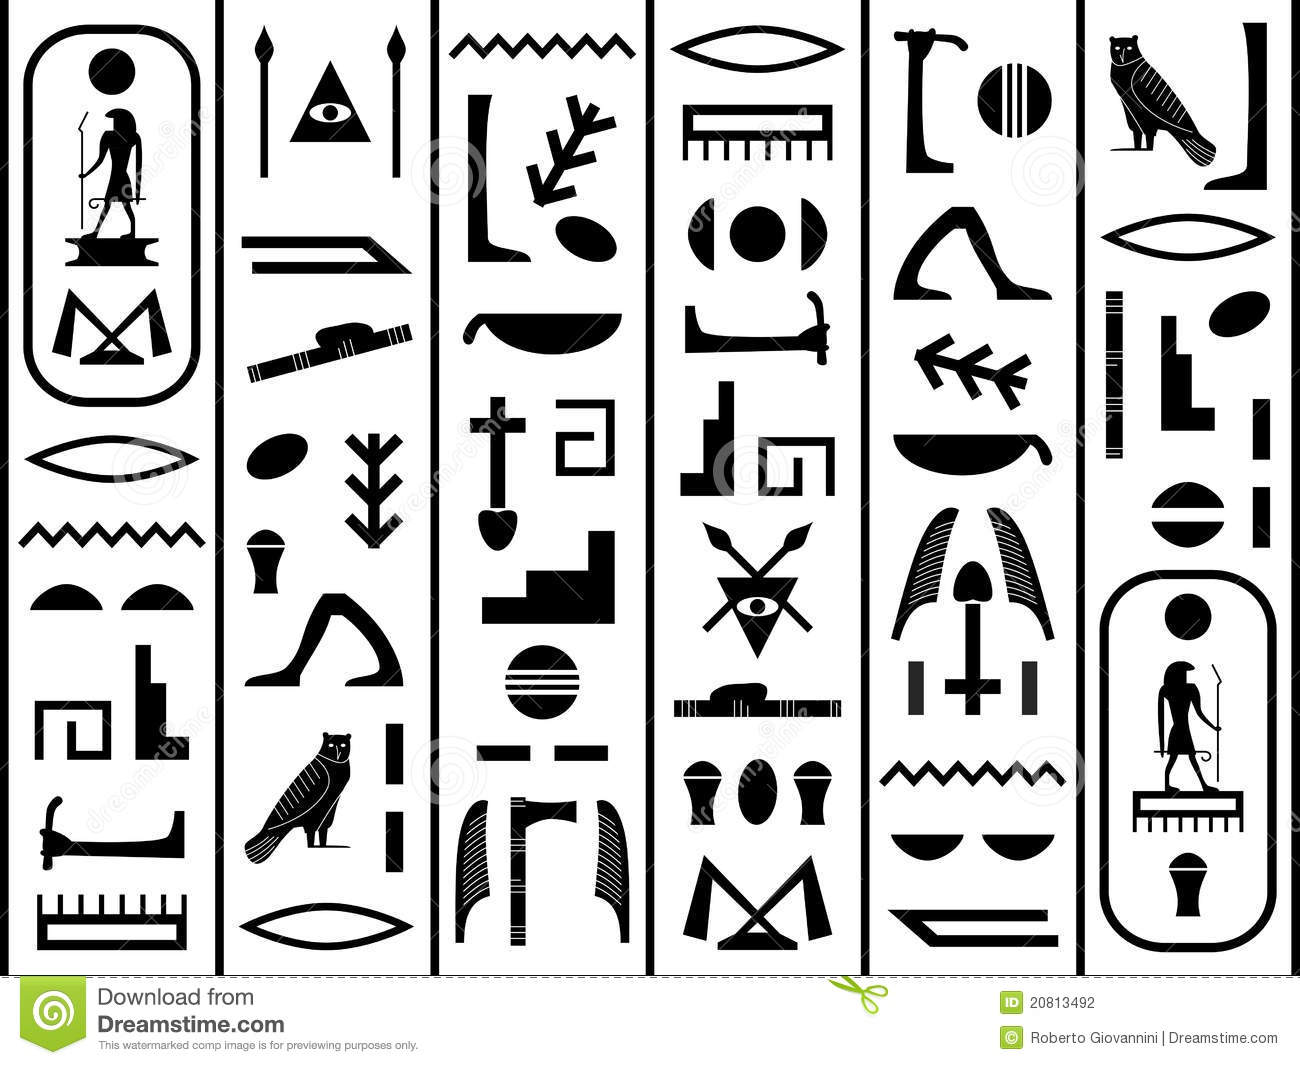 Hieroglyphics #1